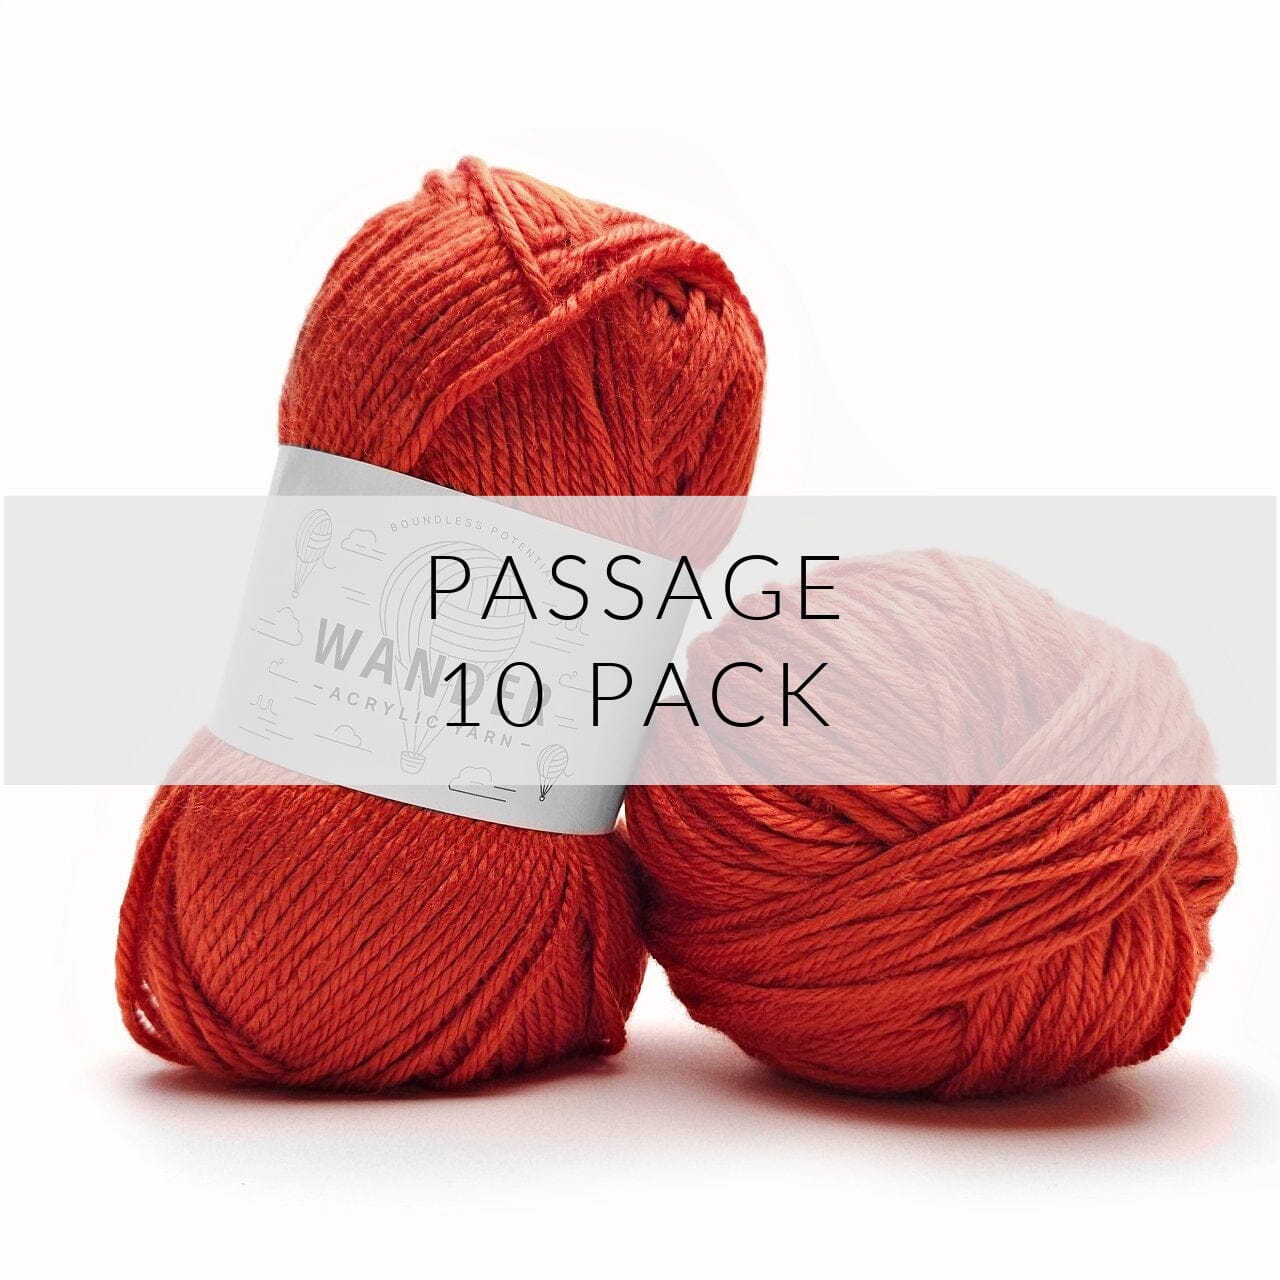 10 Pack Wander Acrylic Yarn Yarn FurlsCrochet Passage 